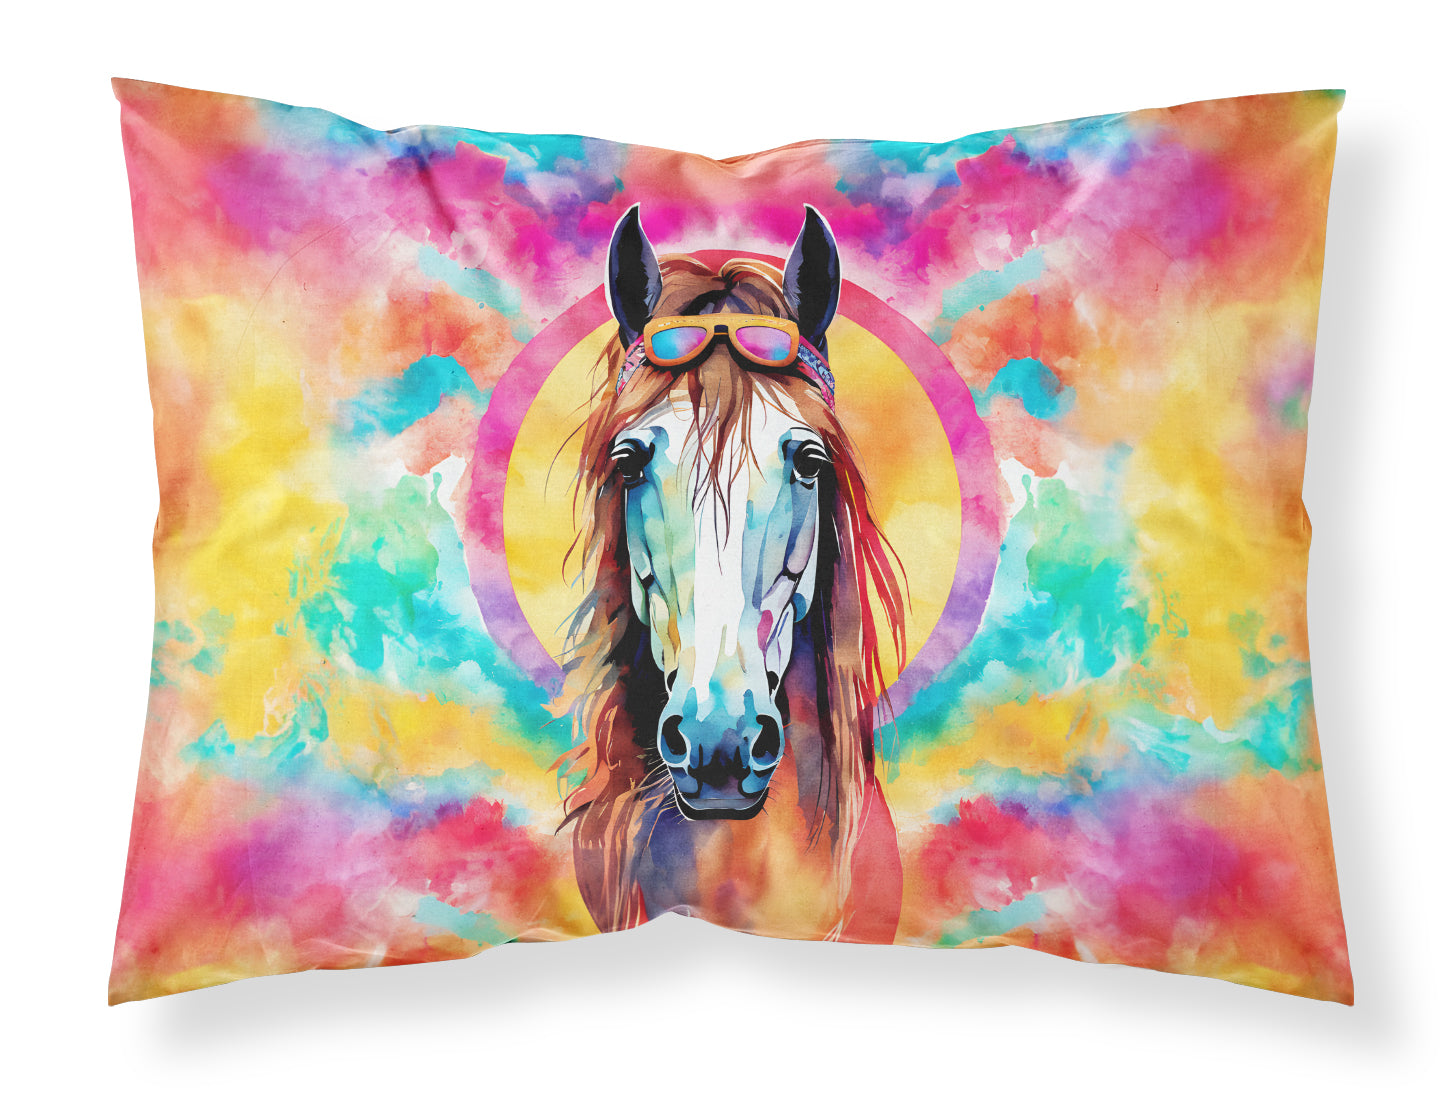 Buy this Hippie Animal Horse Standard Pillowcase